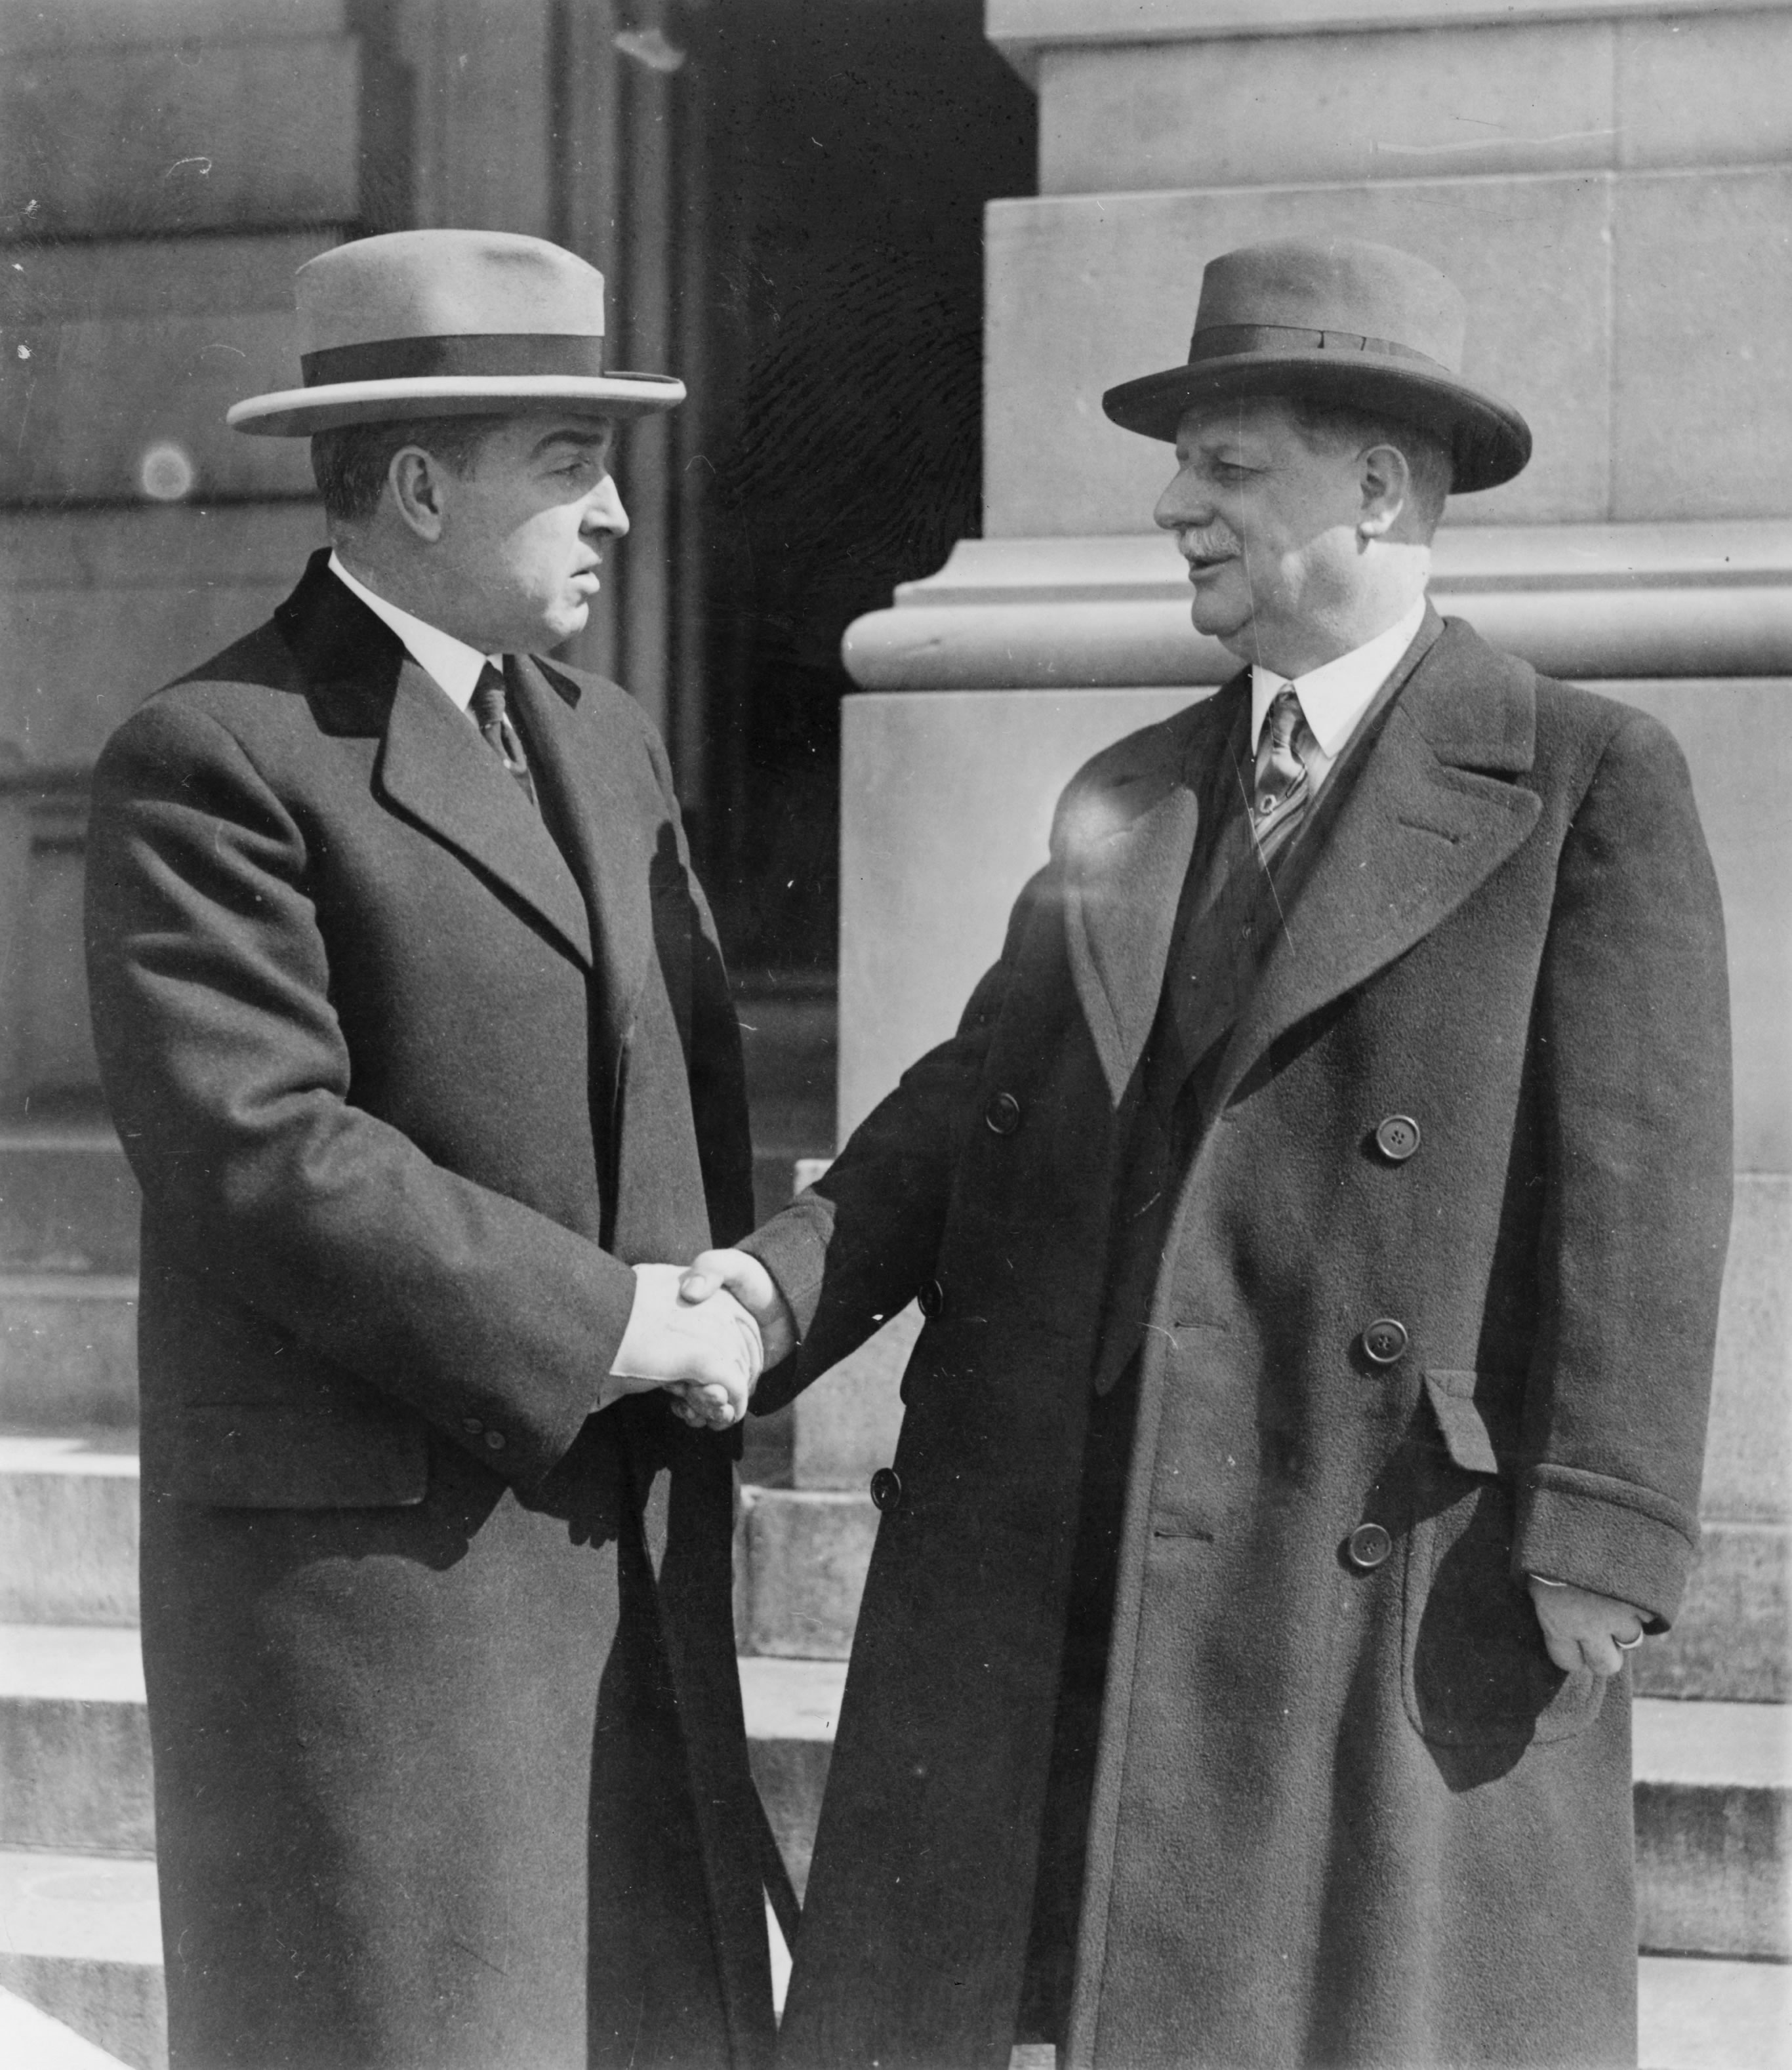 John Hill and John Linthicum shaking hands